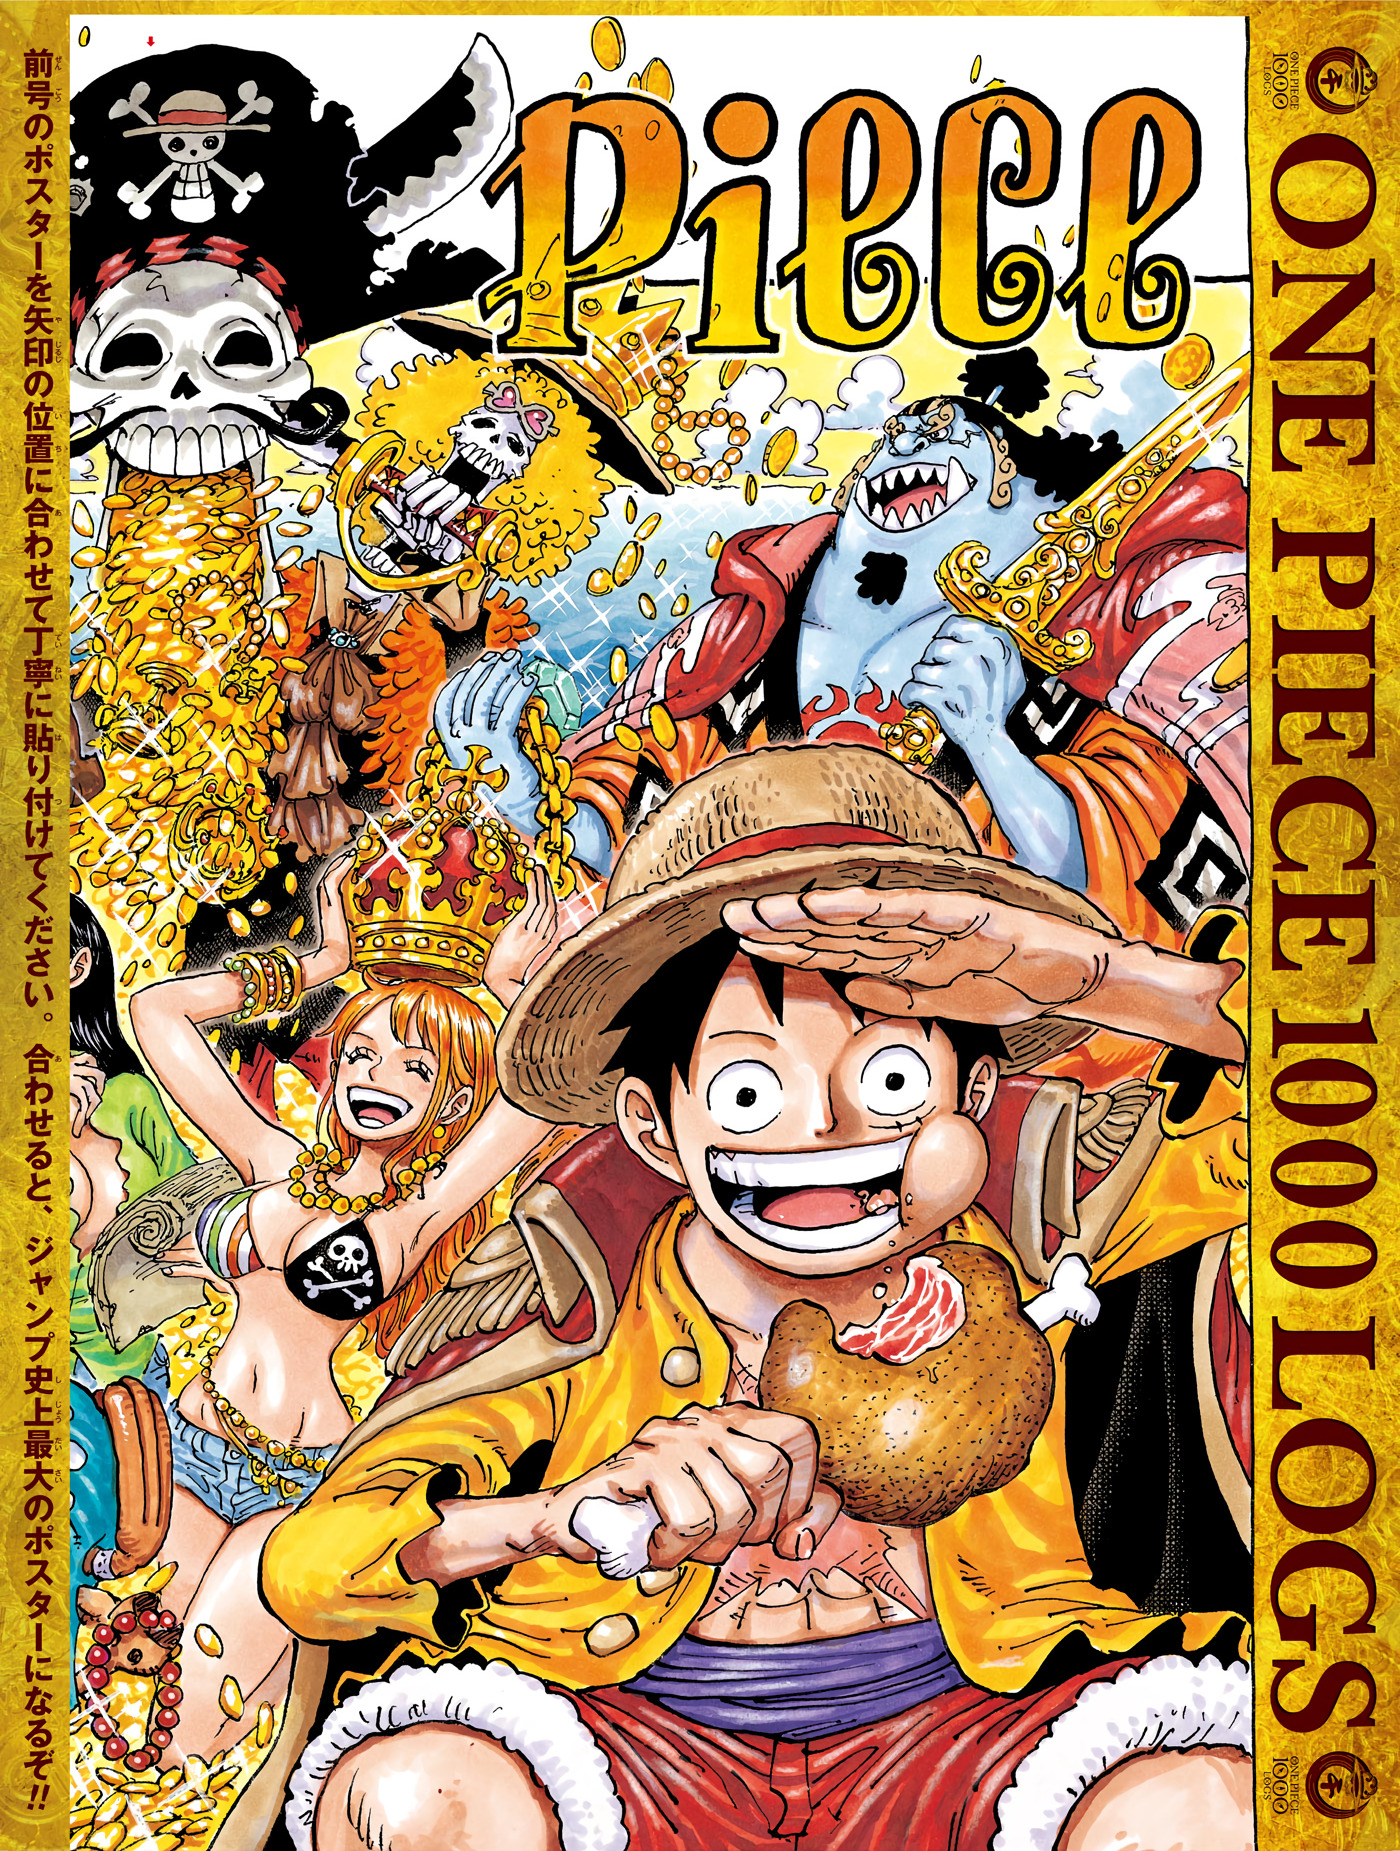 One Piece Anime Film Manga Fiction, One Piece Film Gold, human